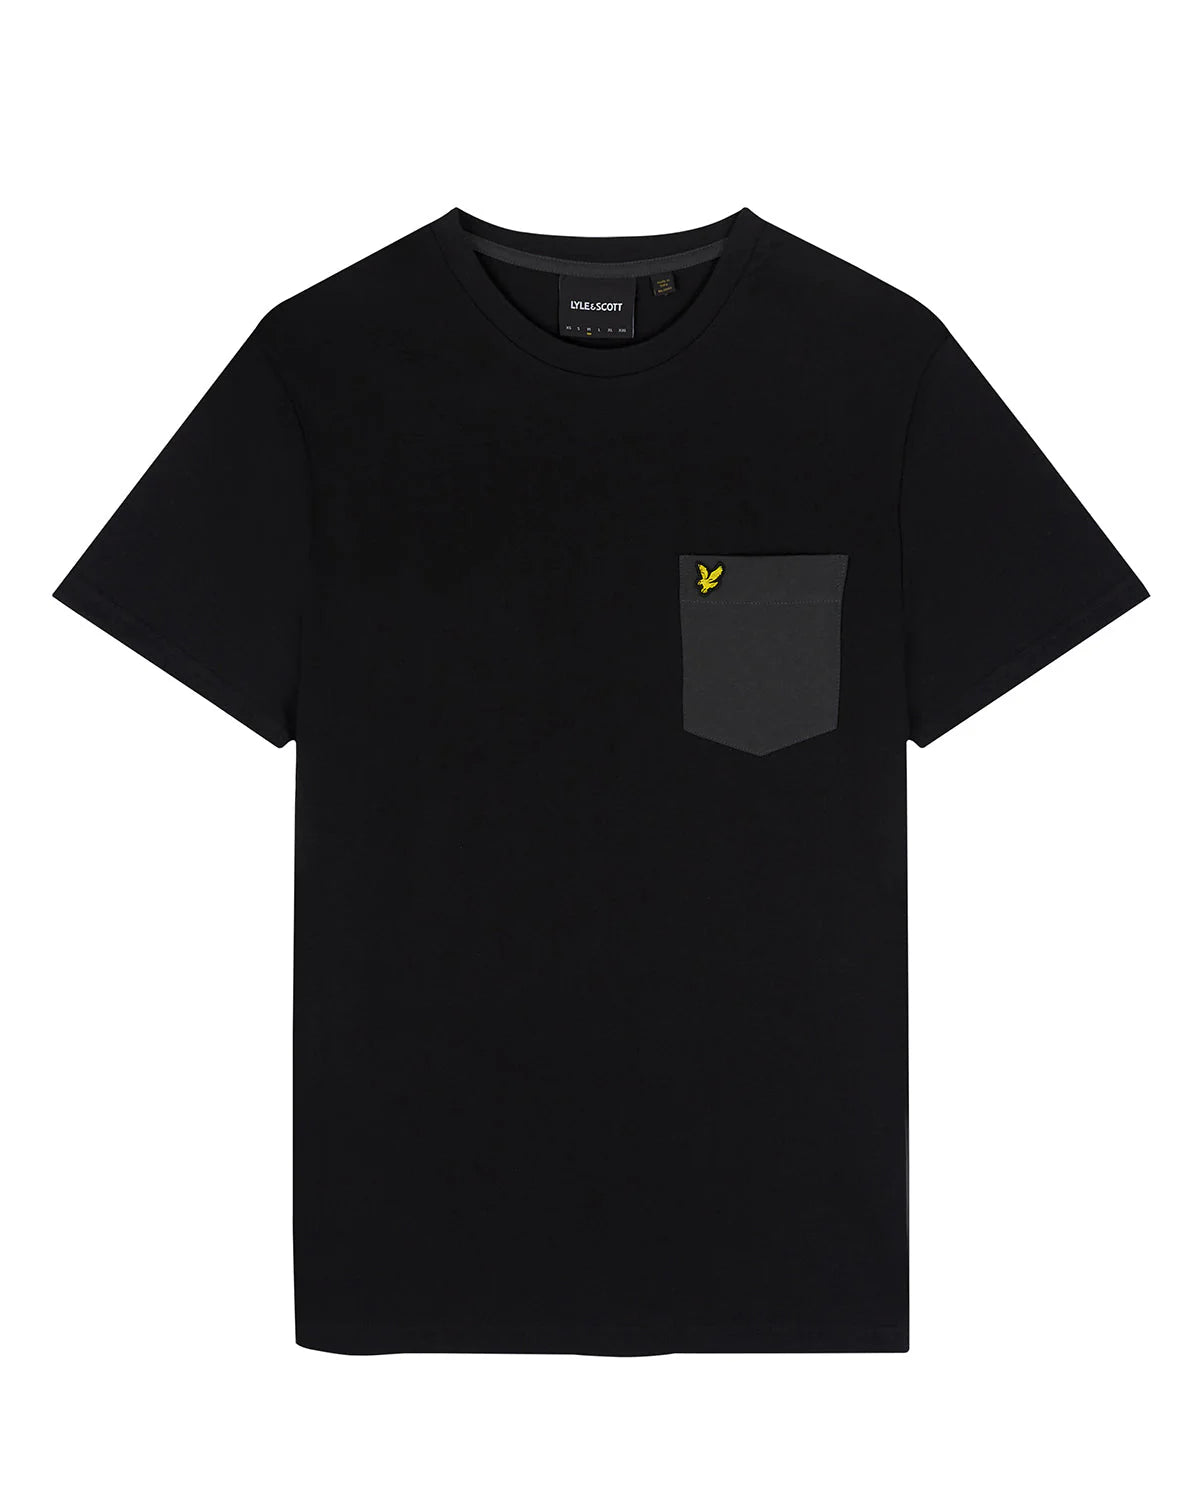 Lyle & Ccott uomo Contrast Pocket t-shirt TS831VOG X176